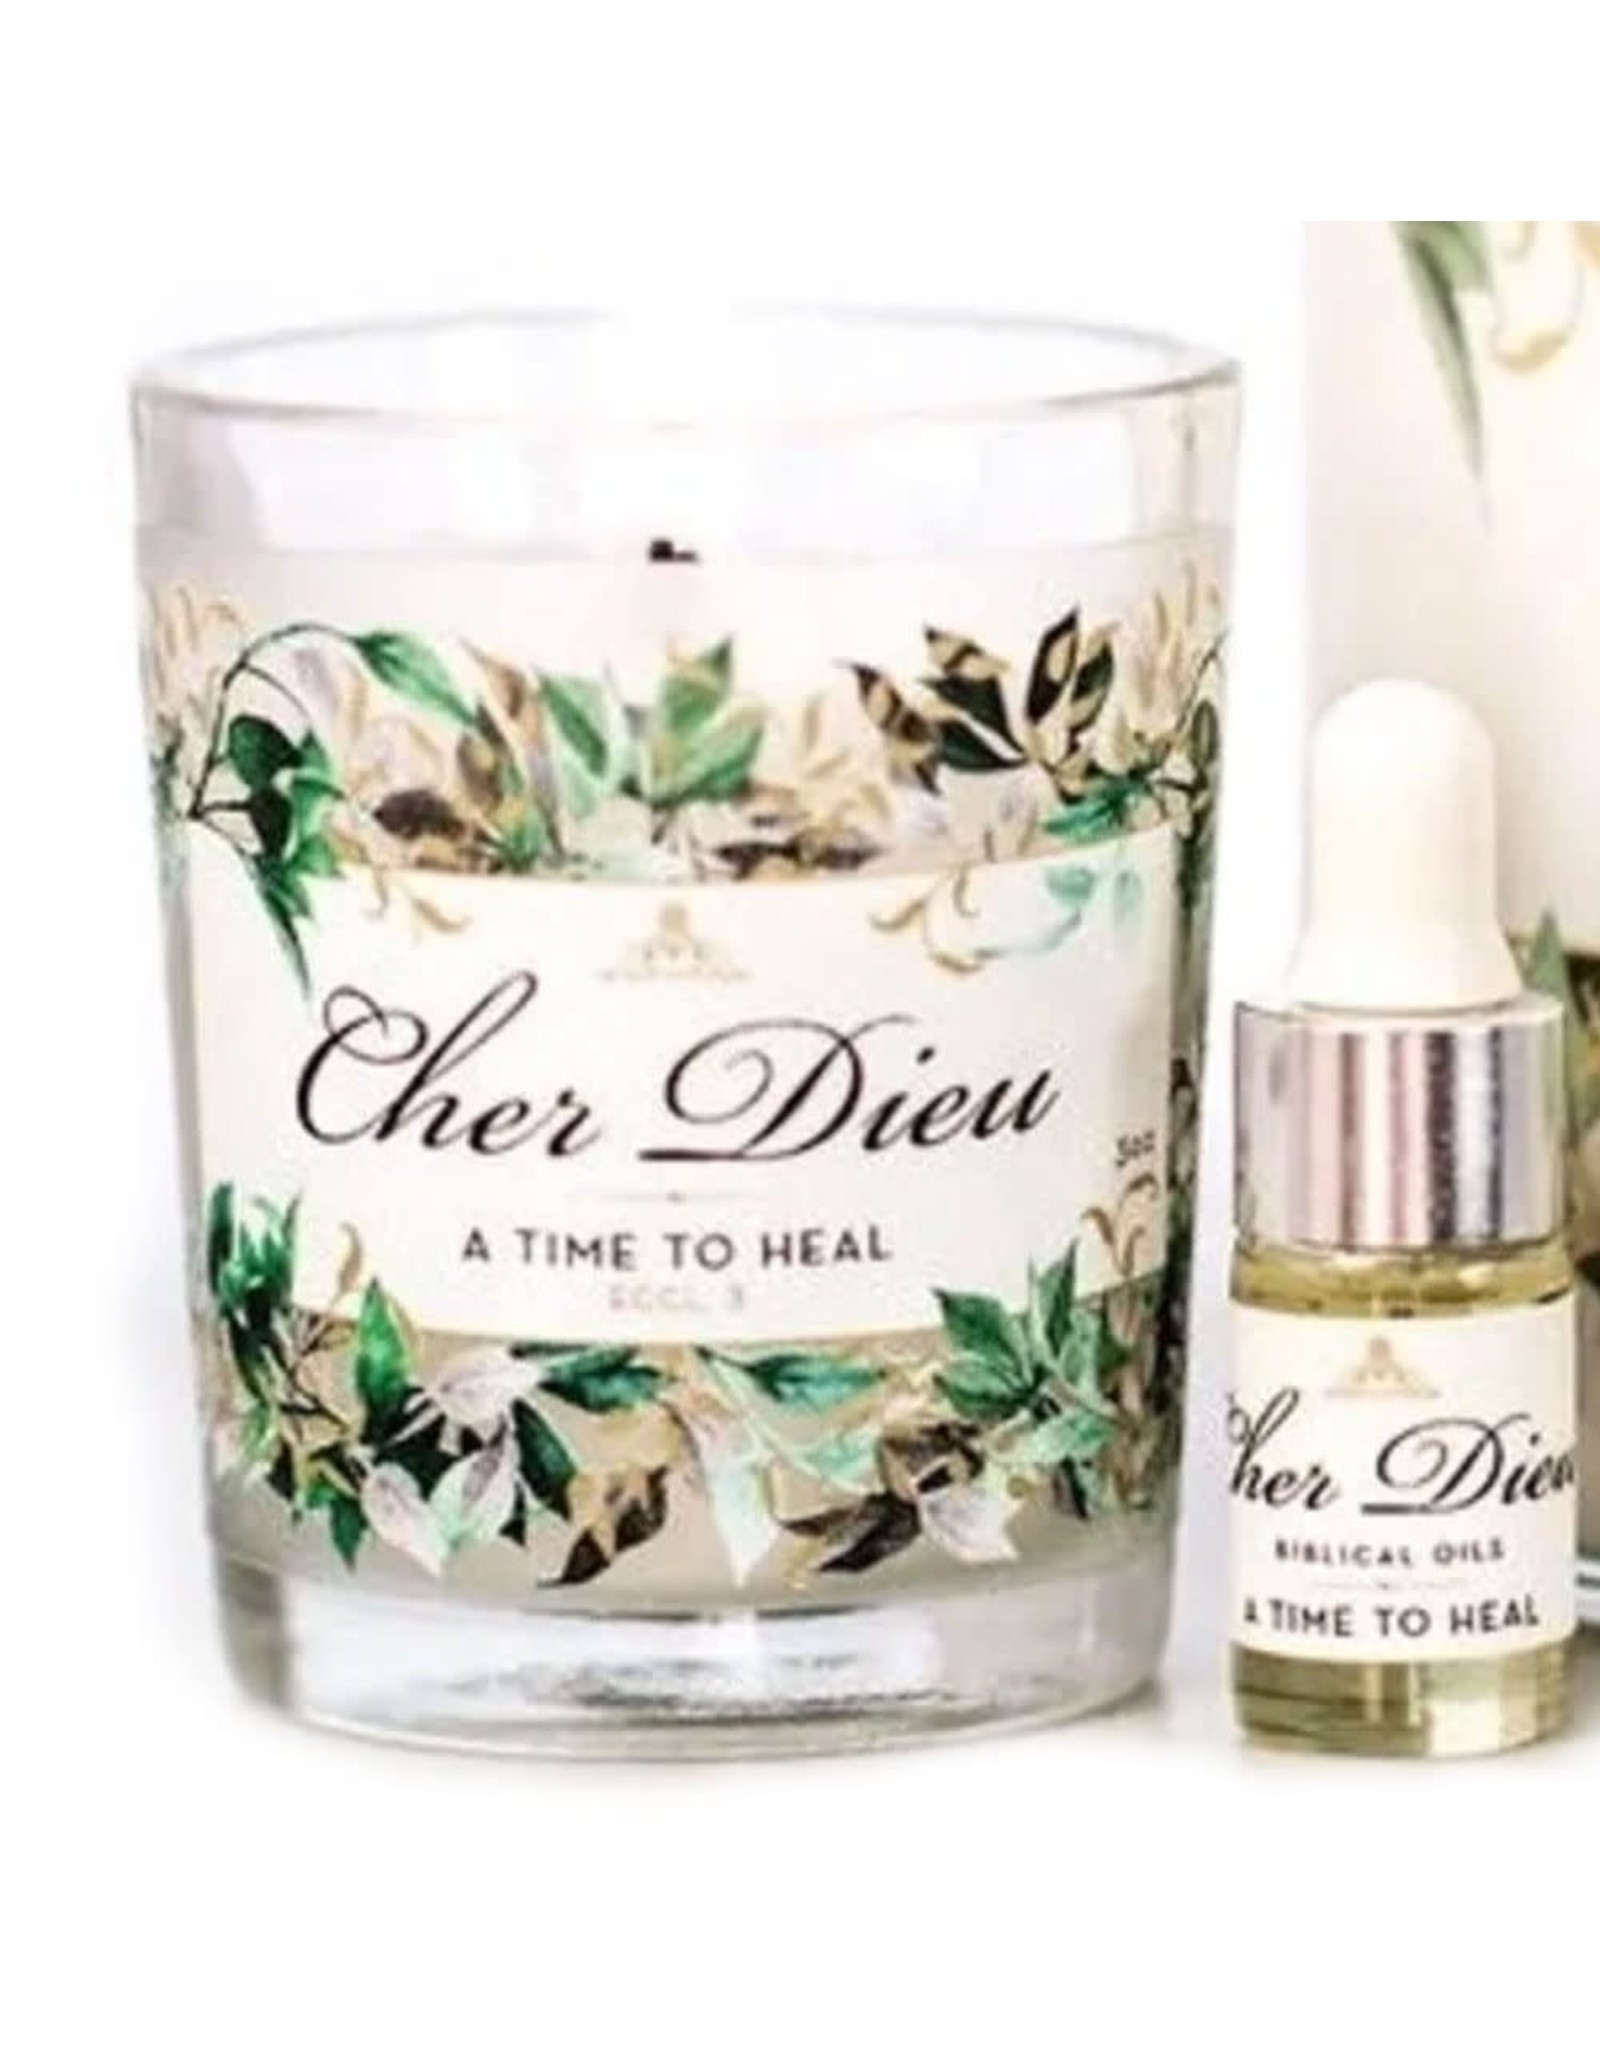 Cher Dieu Cher Dieu A Time to Heal 3 oz Candle Kit